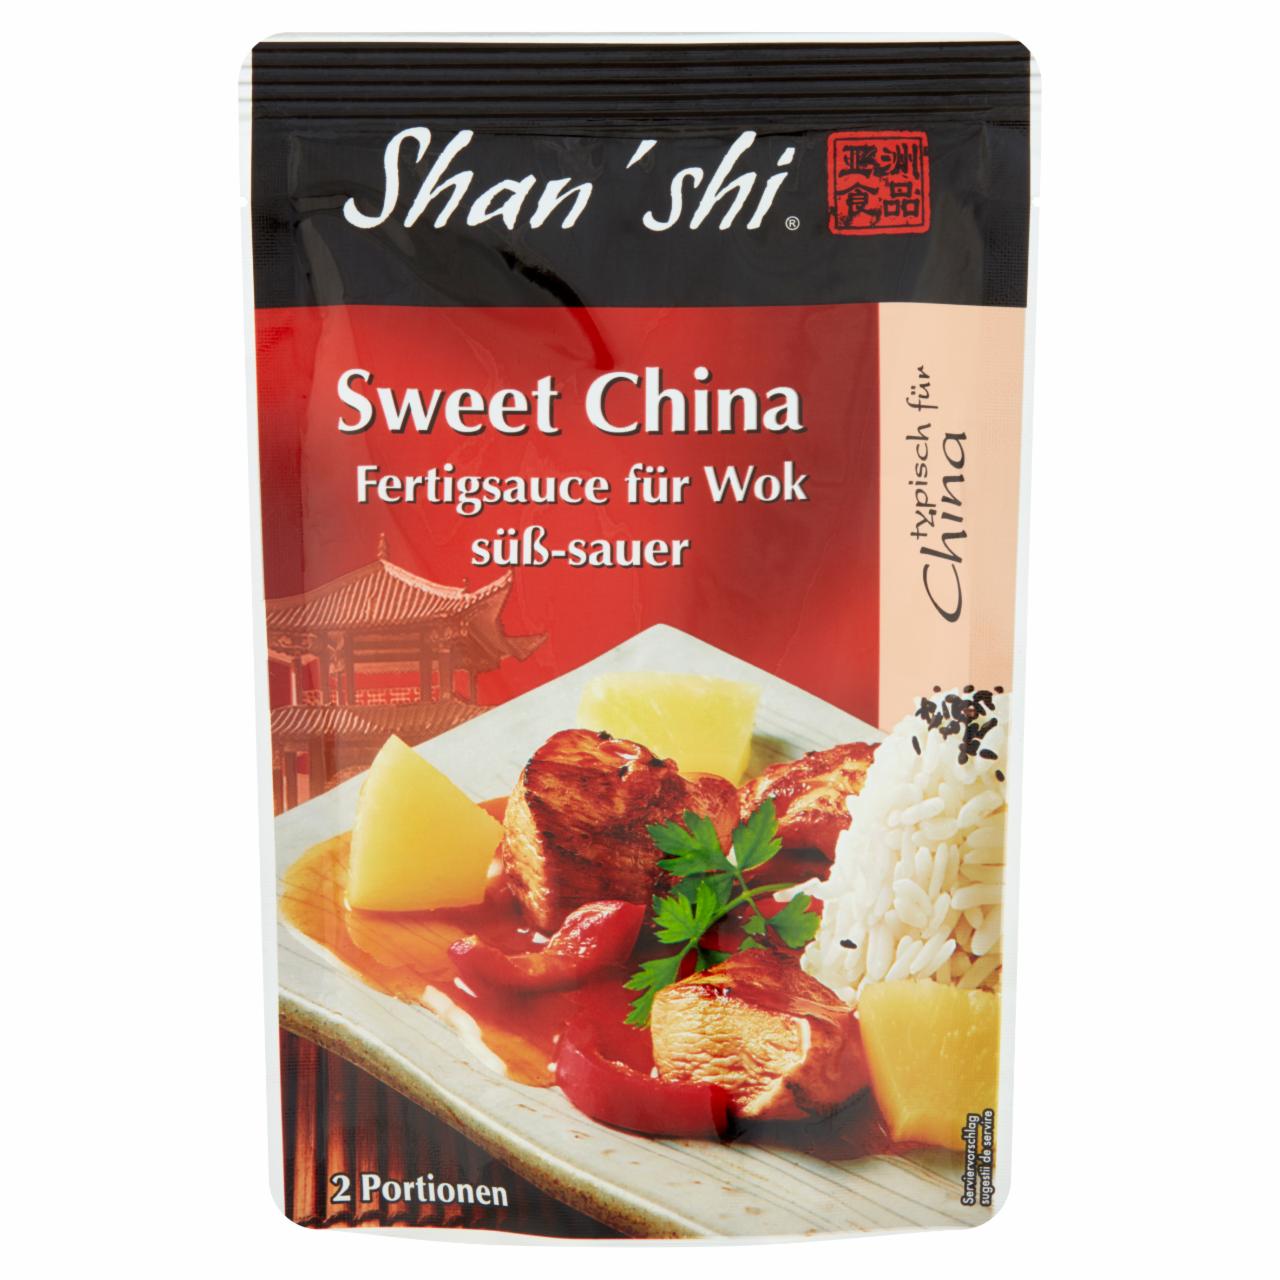 Képek - Shan'shi kínai édes-savanyú mártás 120 g